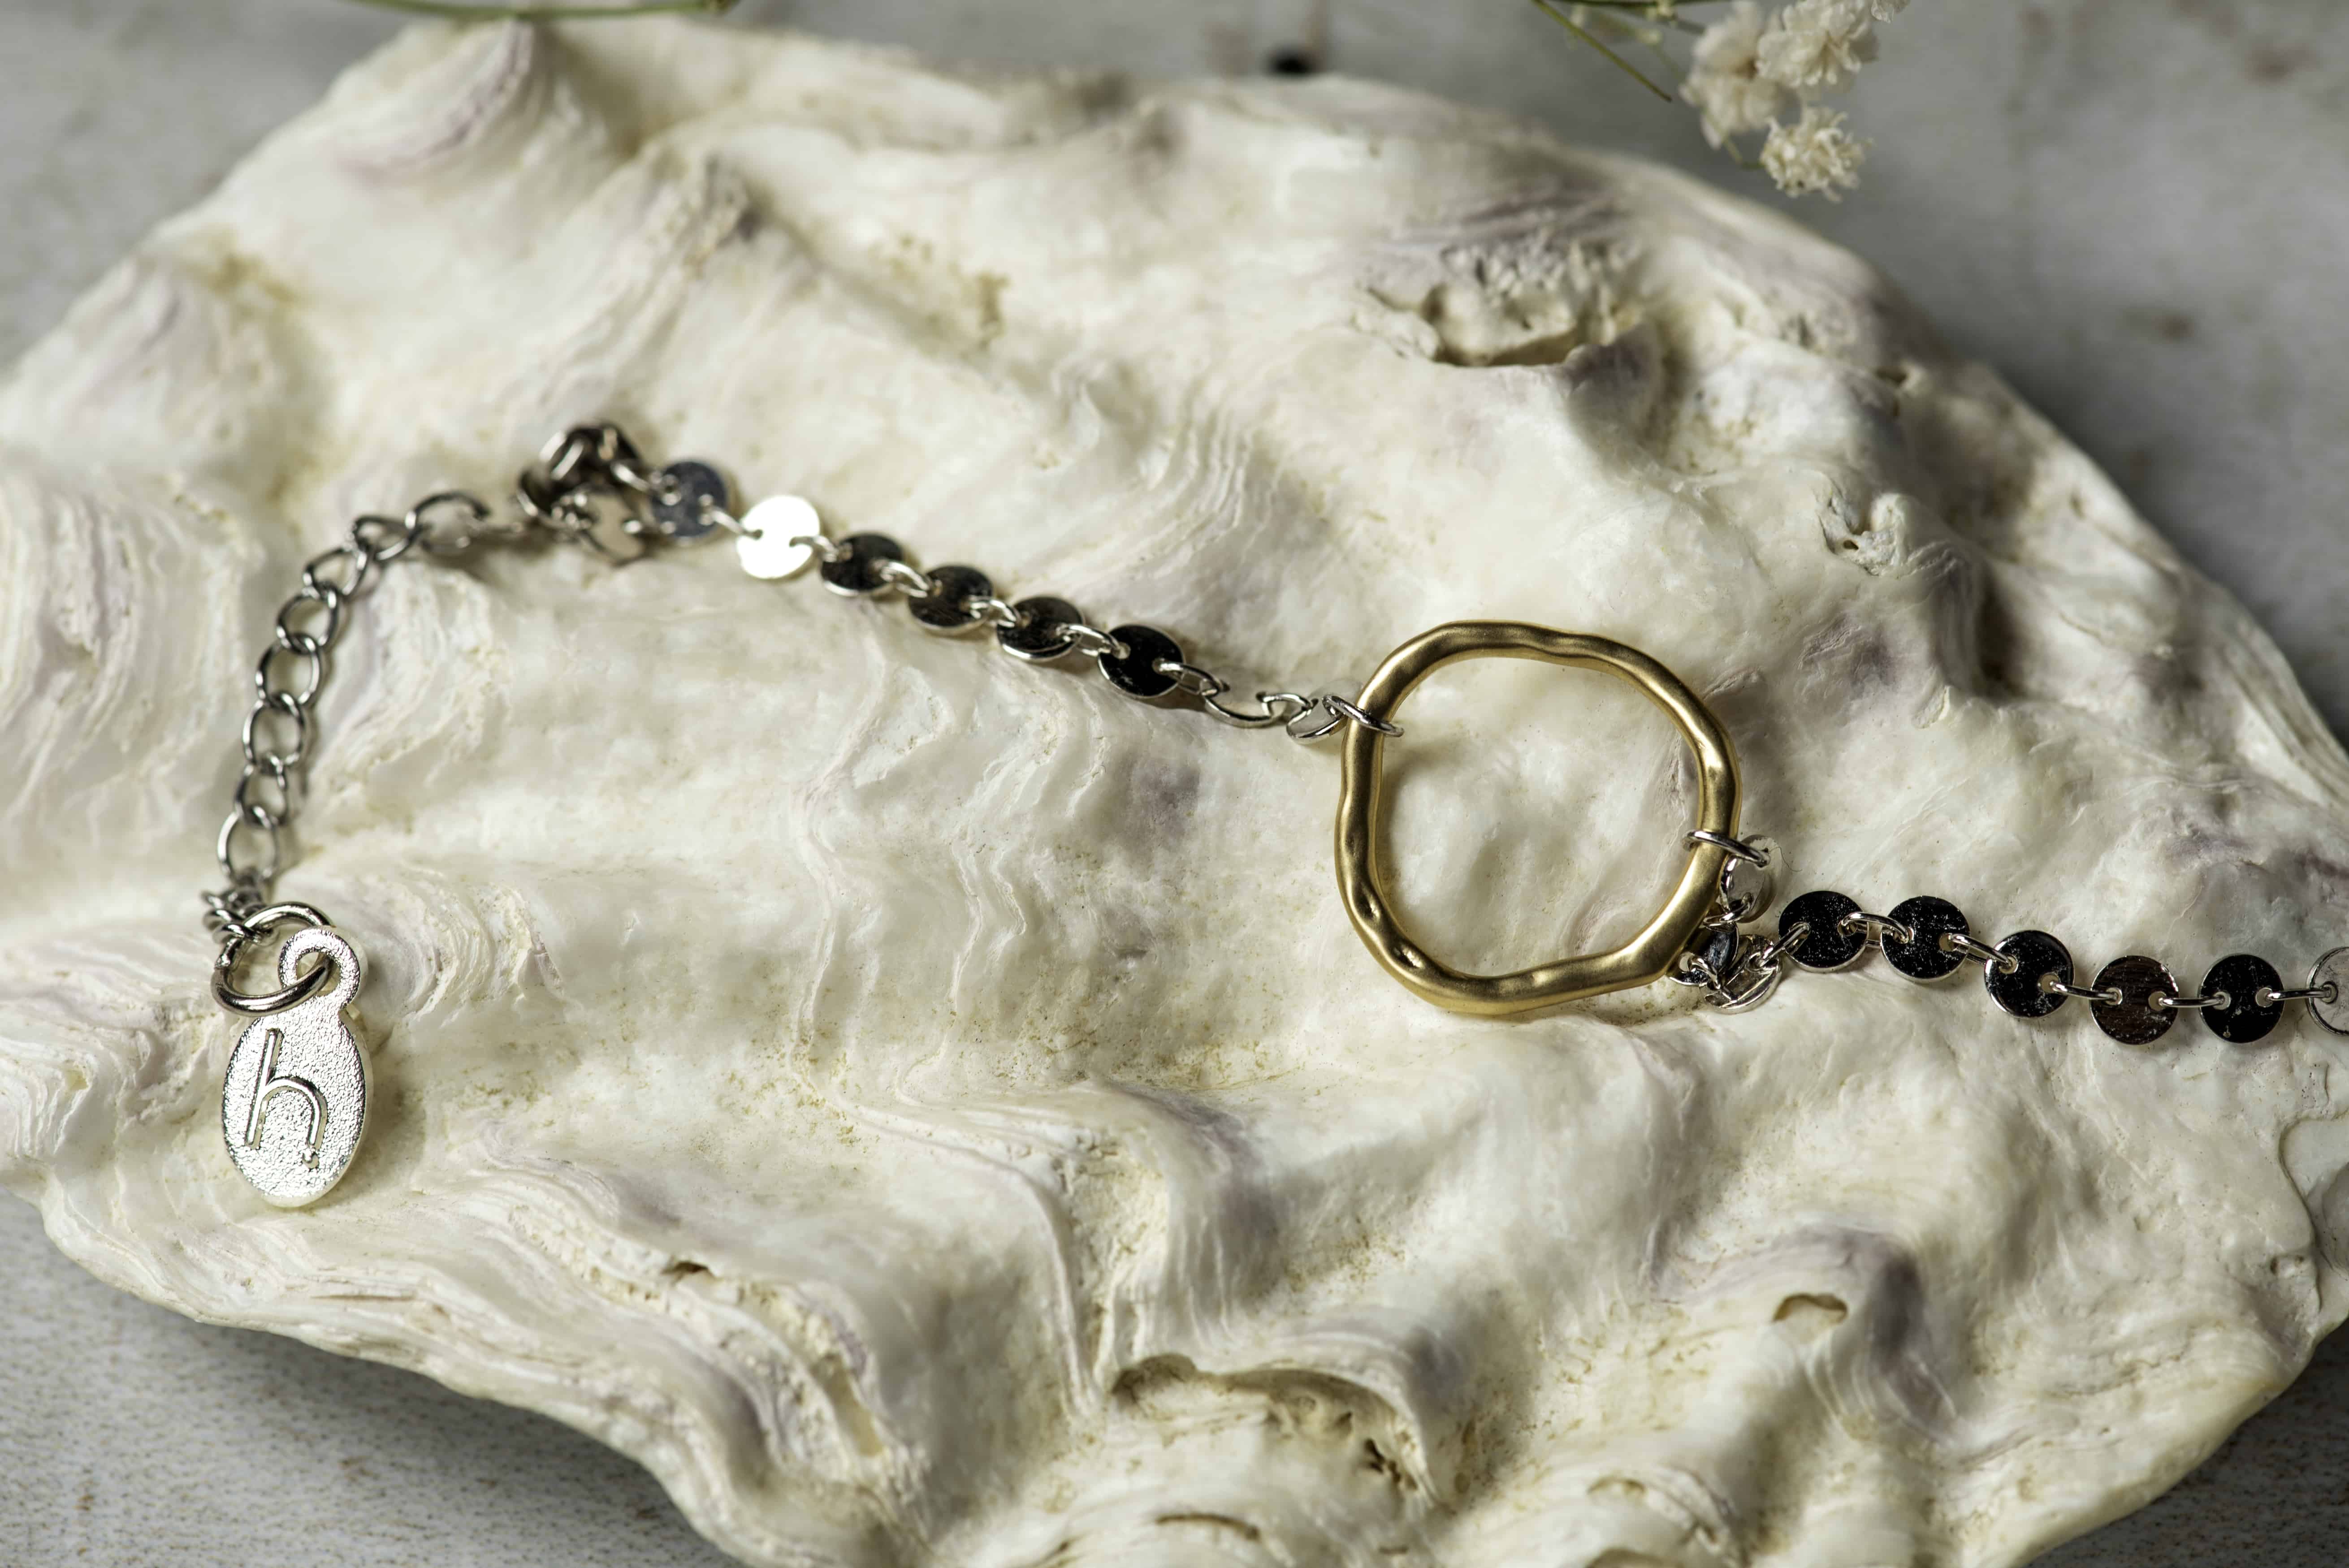 EcoLux☆Lifestyle: Horace Jewelry Creates Delicate Minimalist Charm